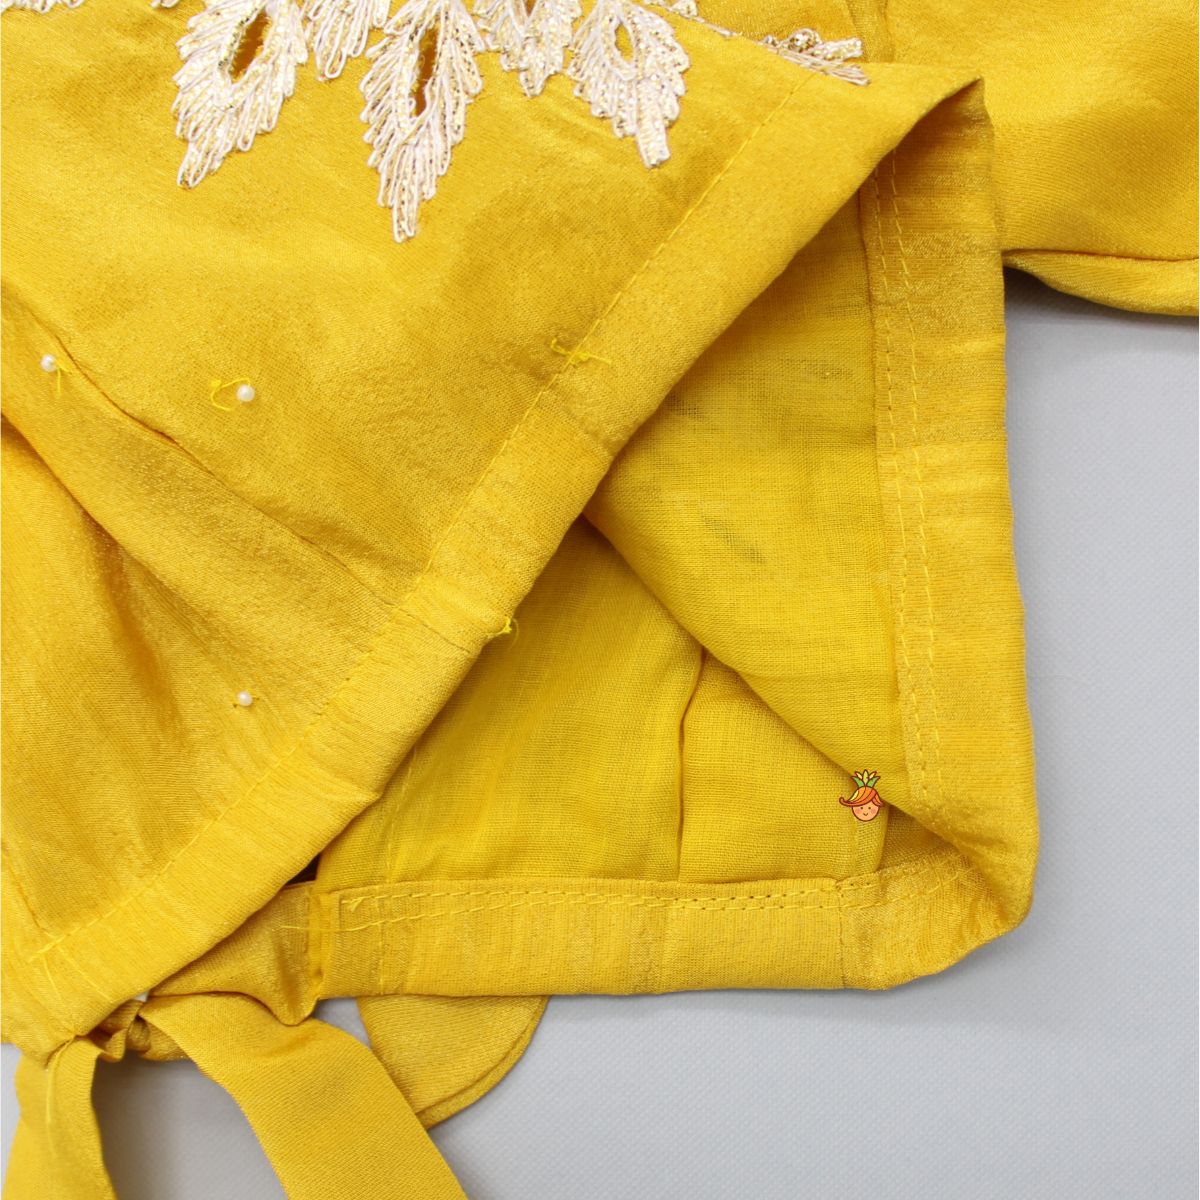 Yellow Gota Embroidered Yoke Top And Pearls Embellished Scalloped Lehenga